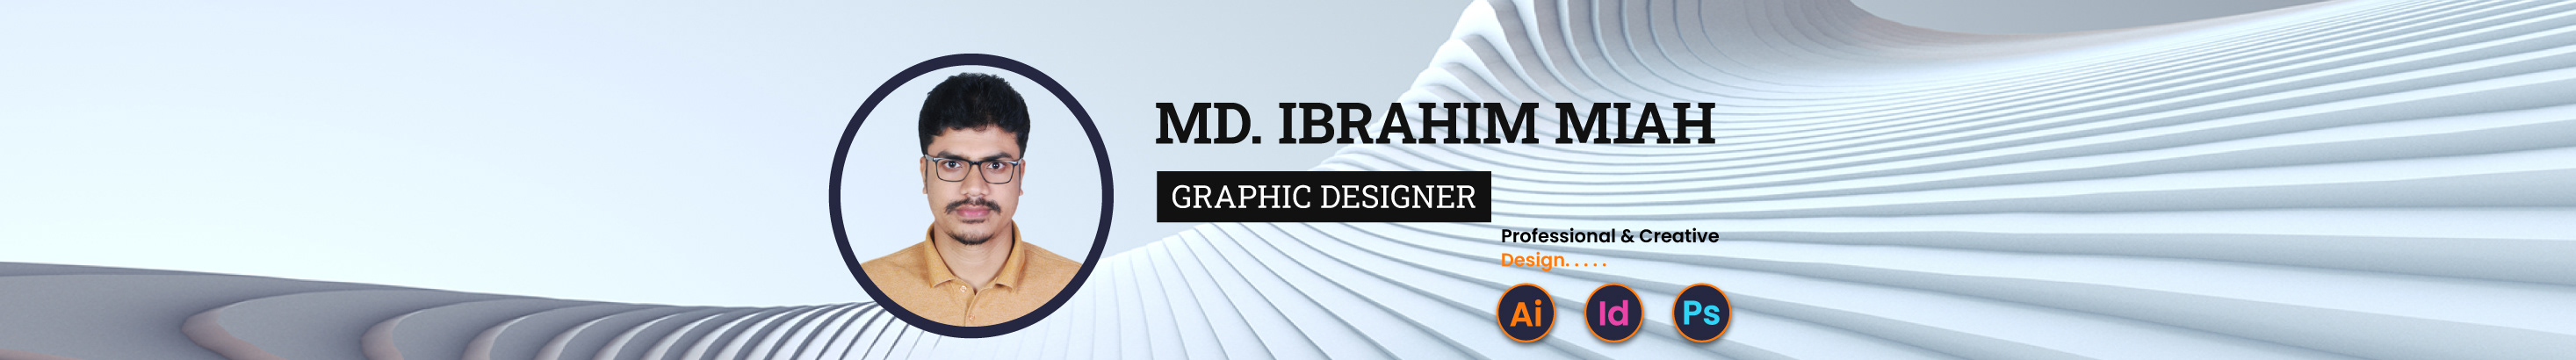 Profielbanner van MD. IBRAHIM MIAH